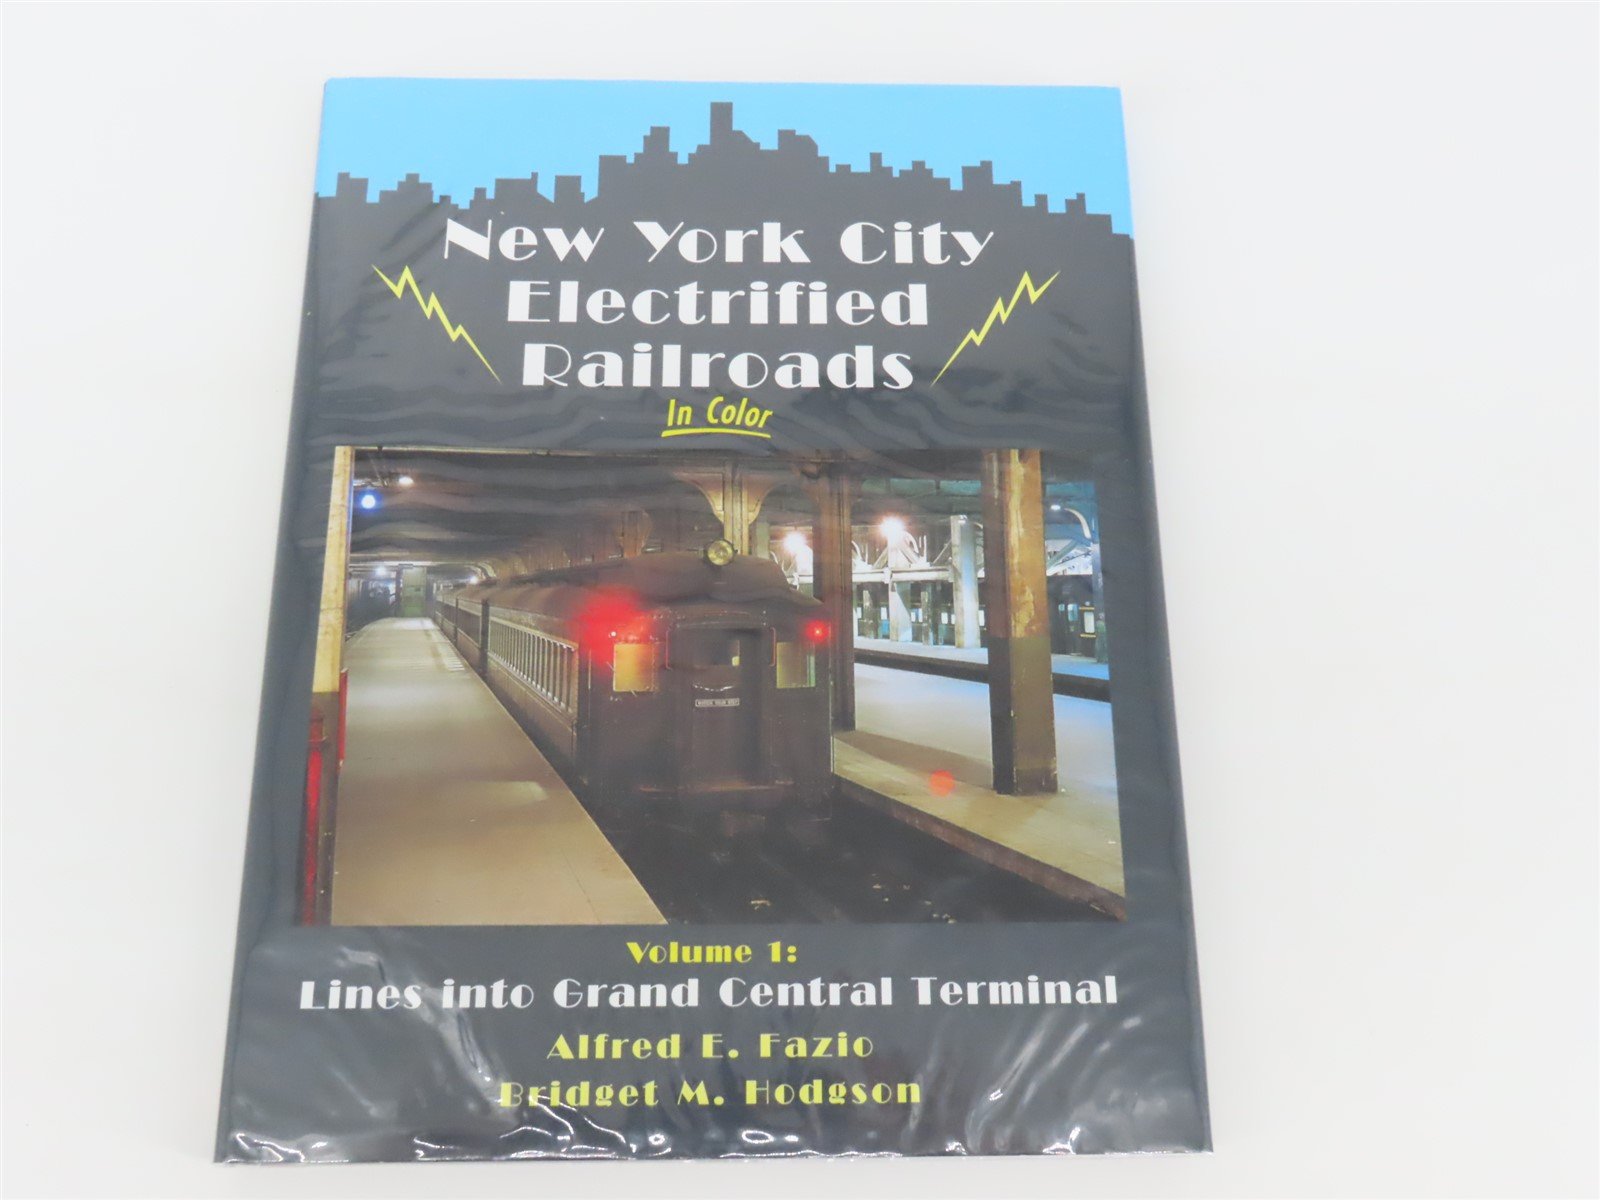 Morning Sun: New York City Electrified Railroads Vol 1 by Fazio & Hodgson ©2010